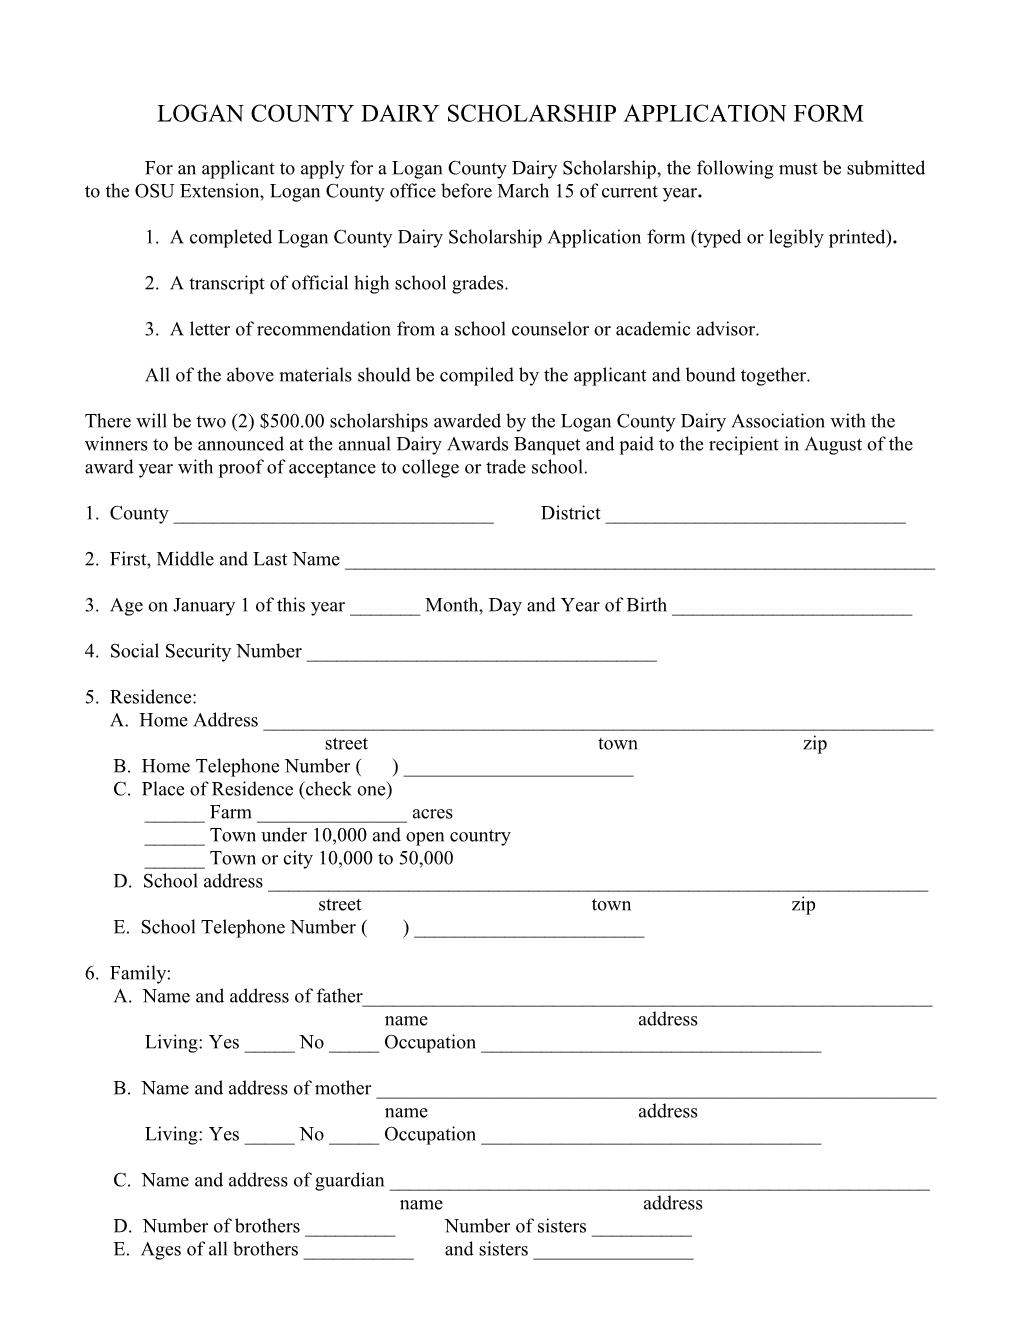 Logan County Dairy Scholarship Application Form